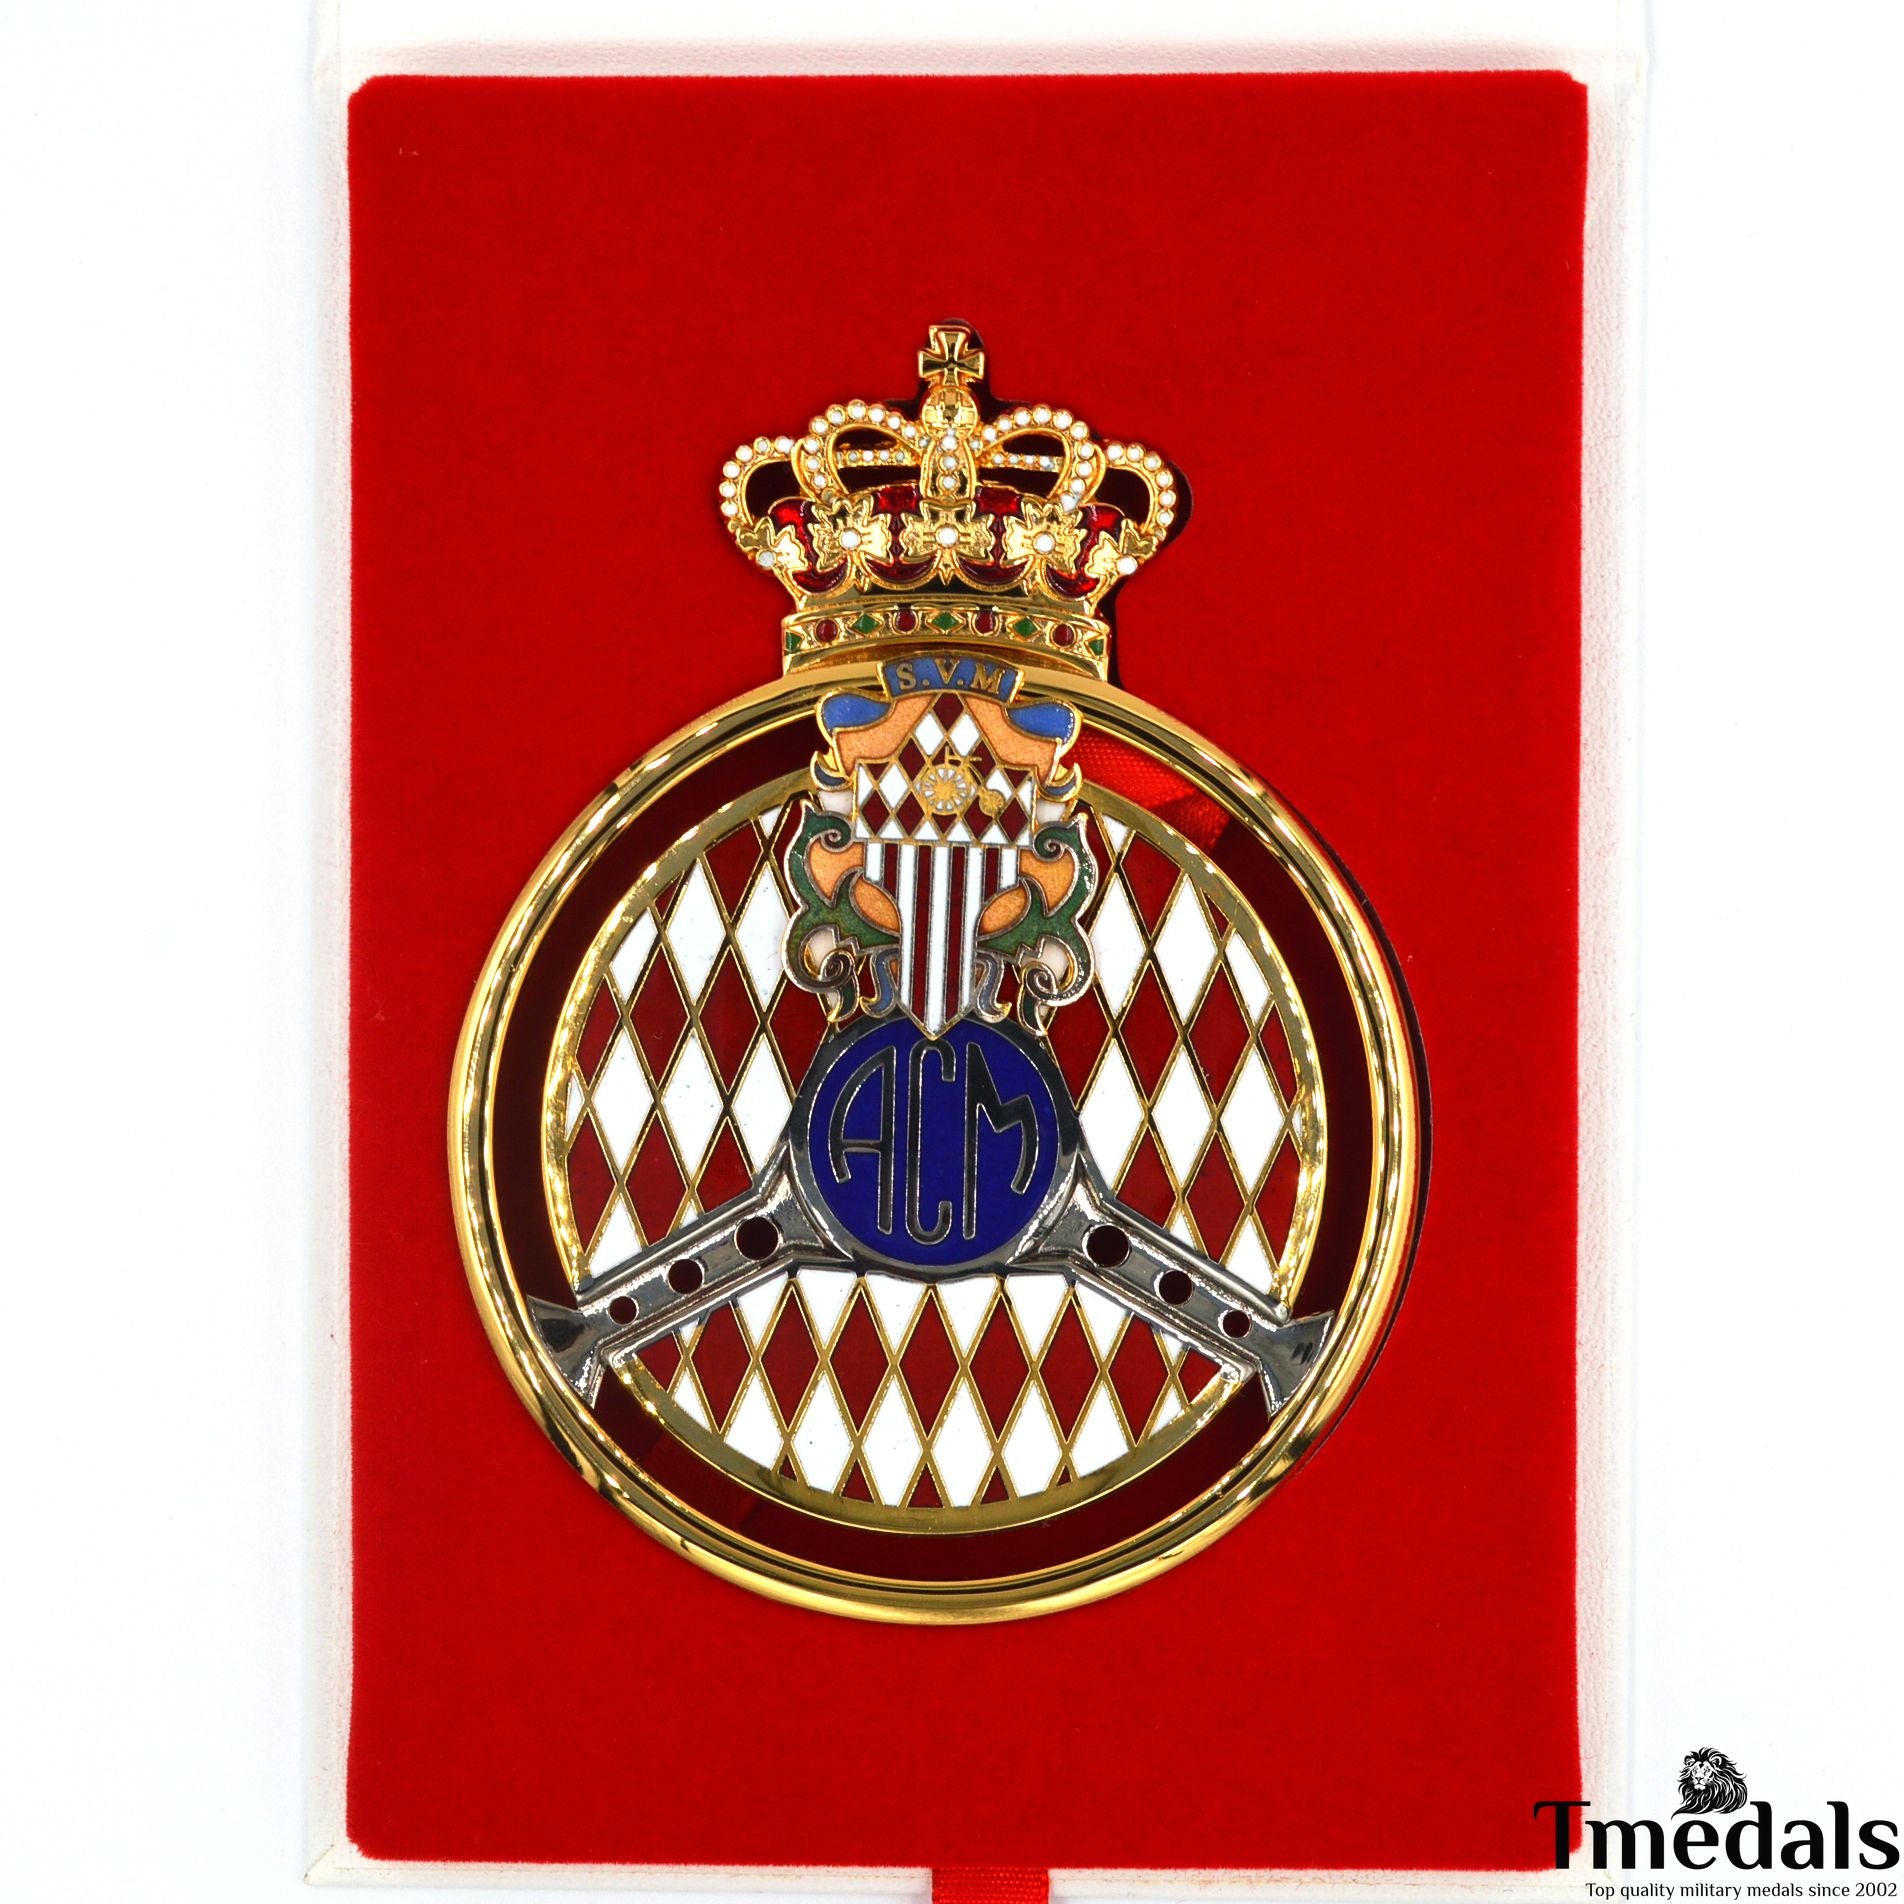 Cased Original ACM GOLD Badge AUTOMOBILE CLUB DE MONACO Grille real enamel 2011 Medal Order Rare!